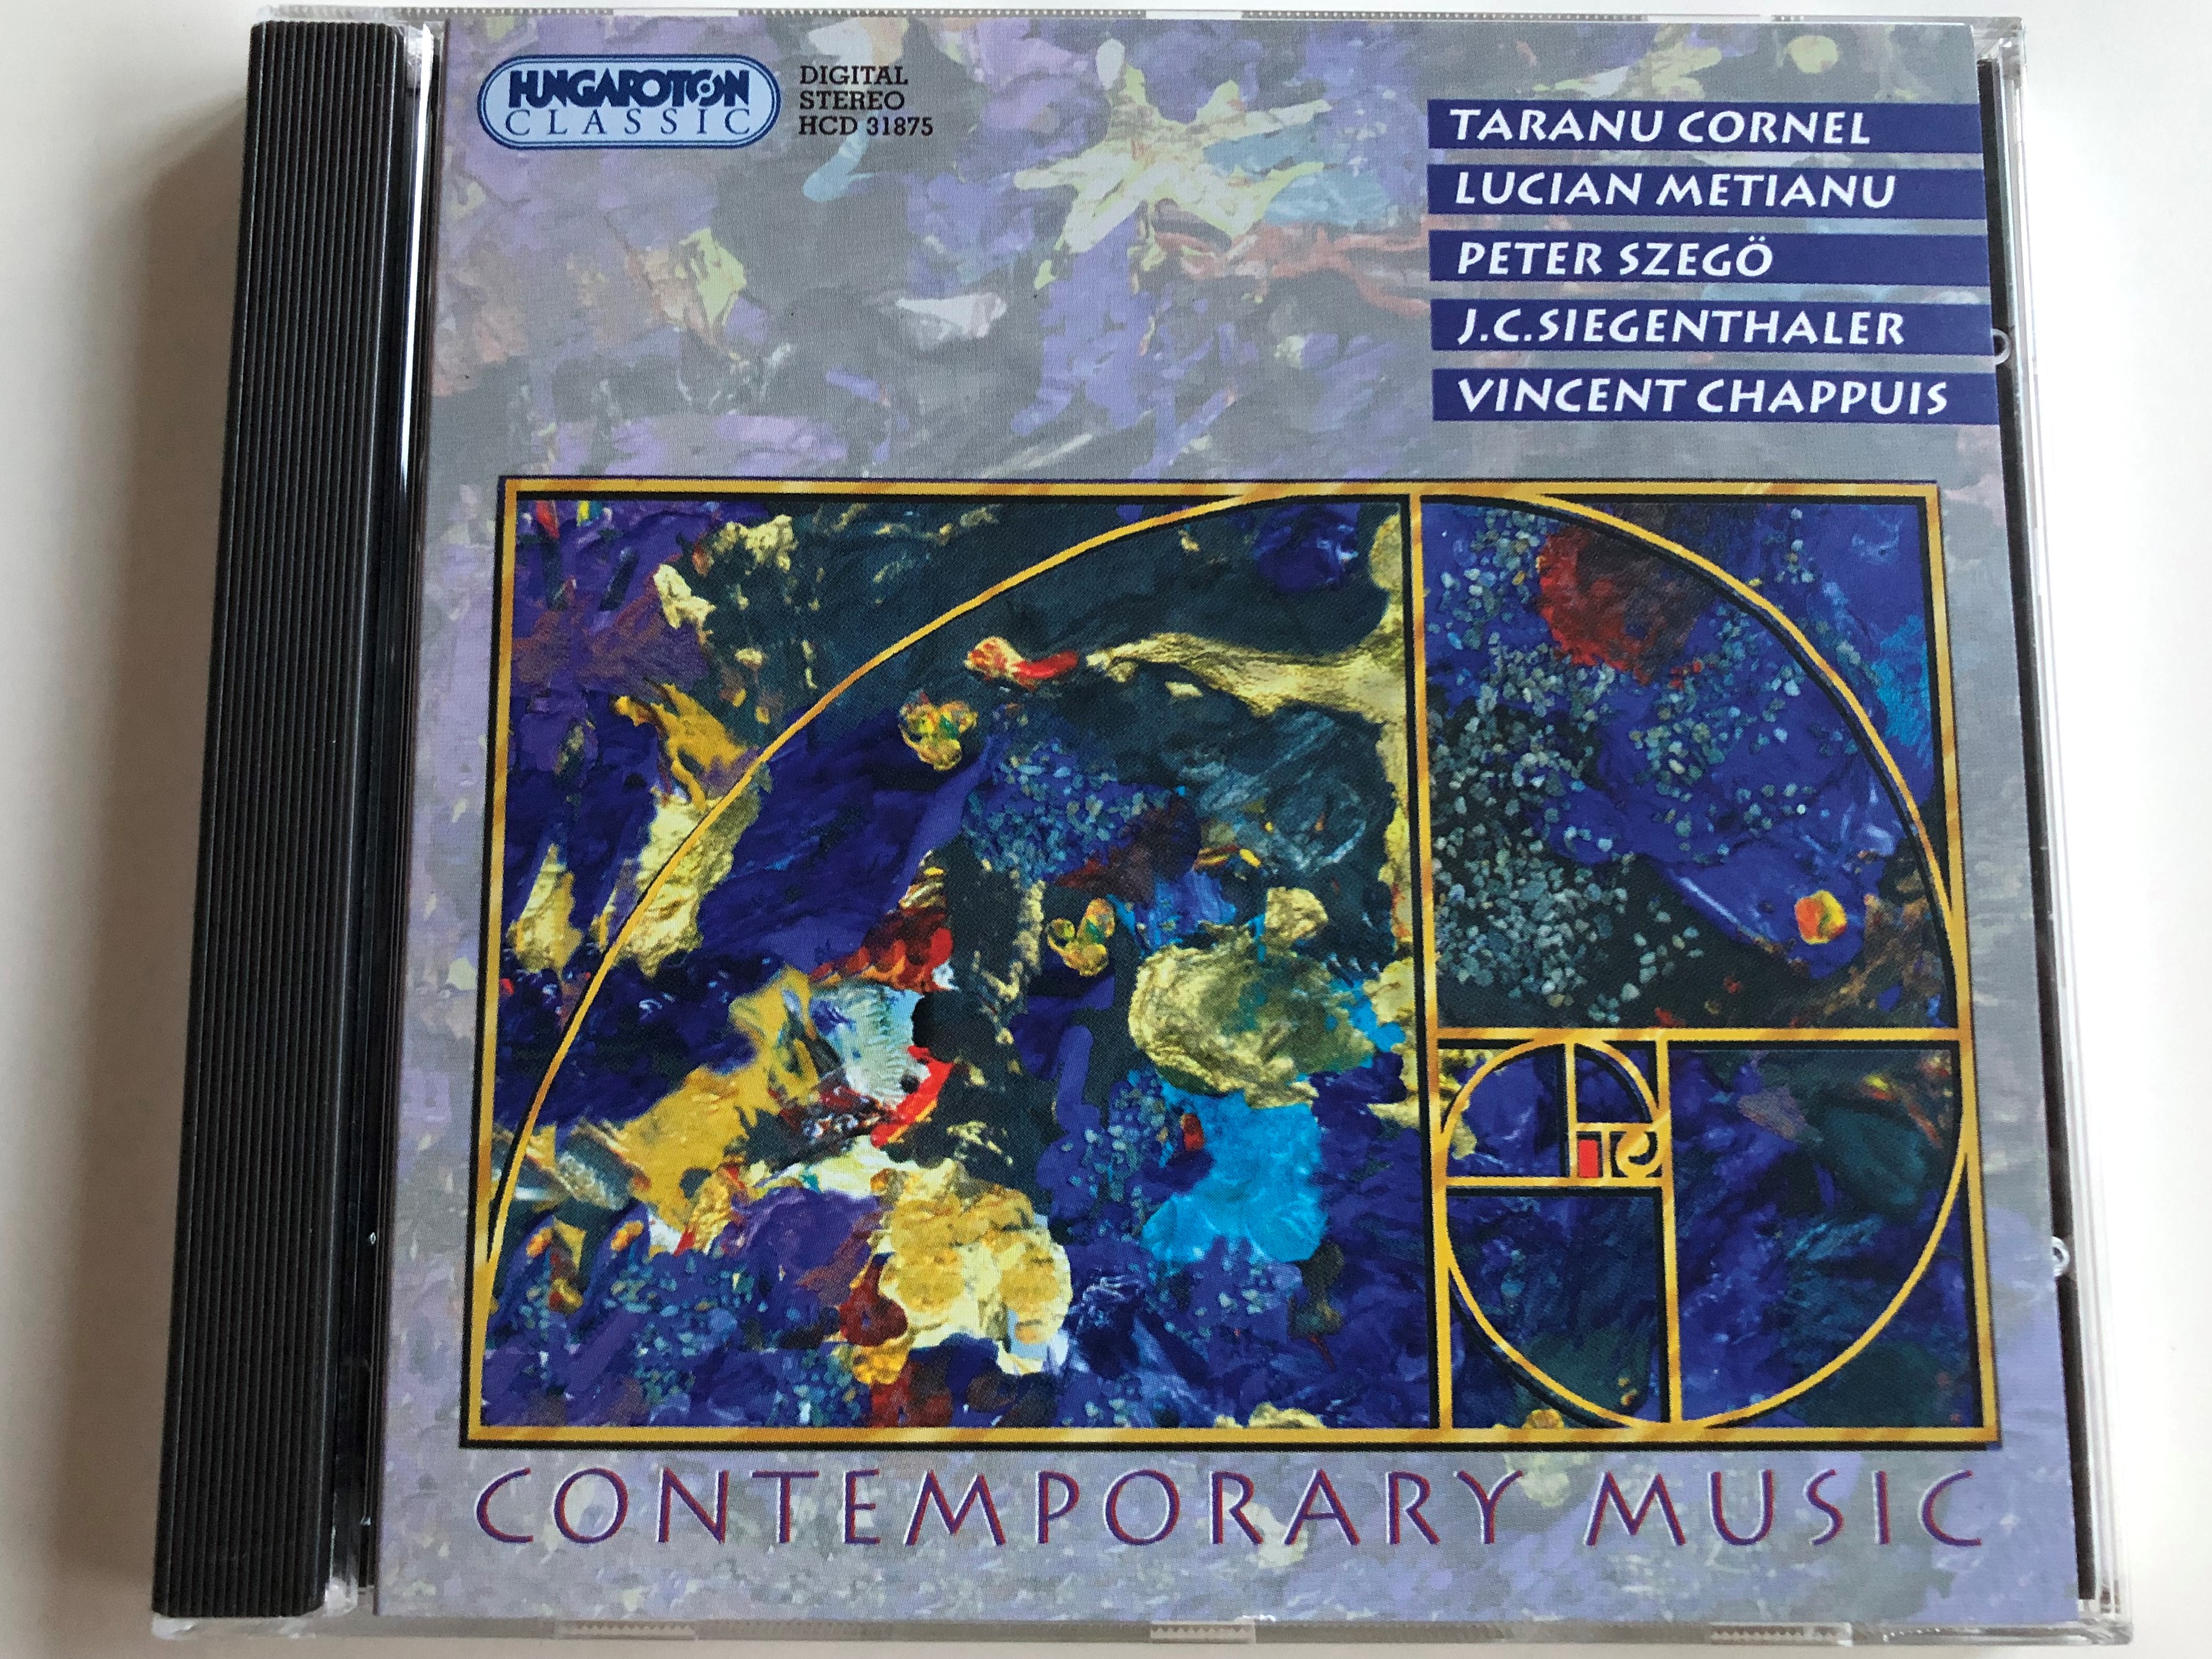 kort-rs-zene-contemporary-music-ars-nova-ensemble-of-cluj-conducted-by-taranu-cornel-lucian-metianu-peter-szeg-j.-c.-siegenthaler-vincent-chappuis-hungaroton-classic-hcd-31875-1-.jpg